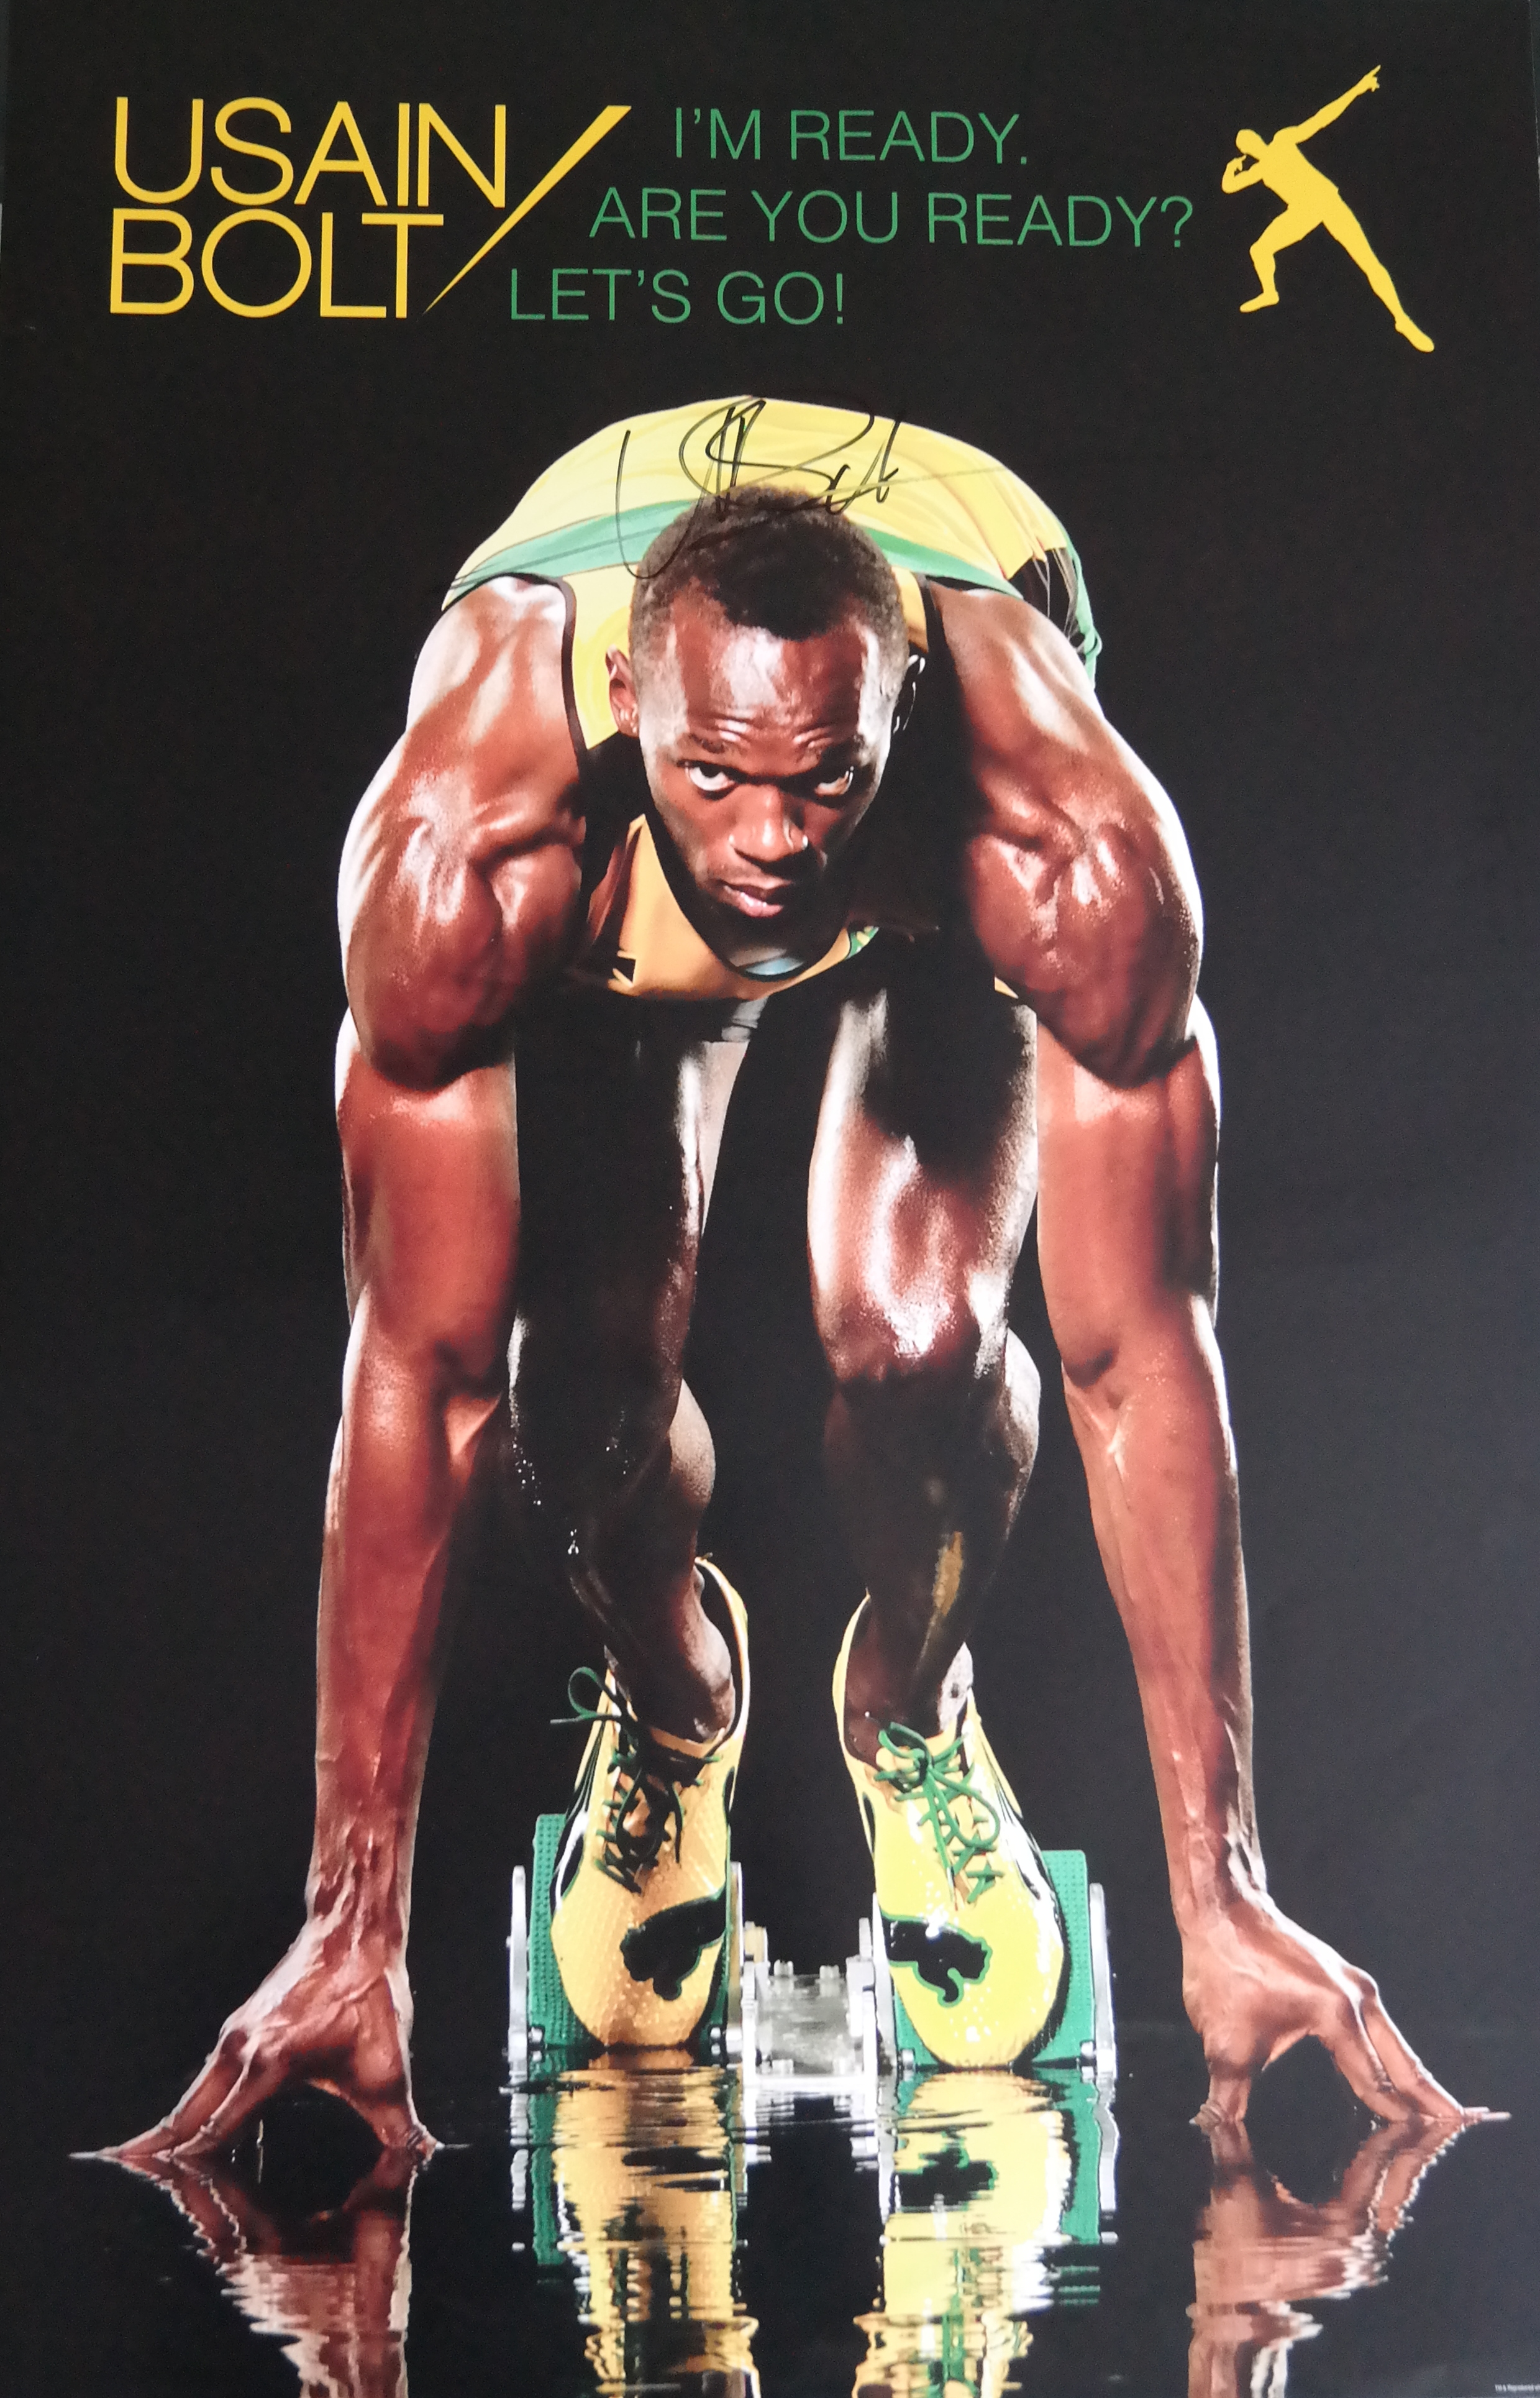 Win a Usain Bolt ‘I’m Ready’ poster